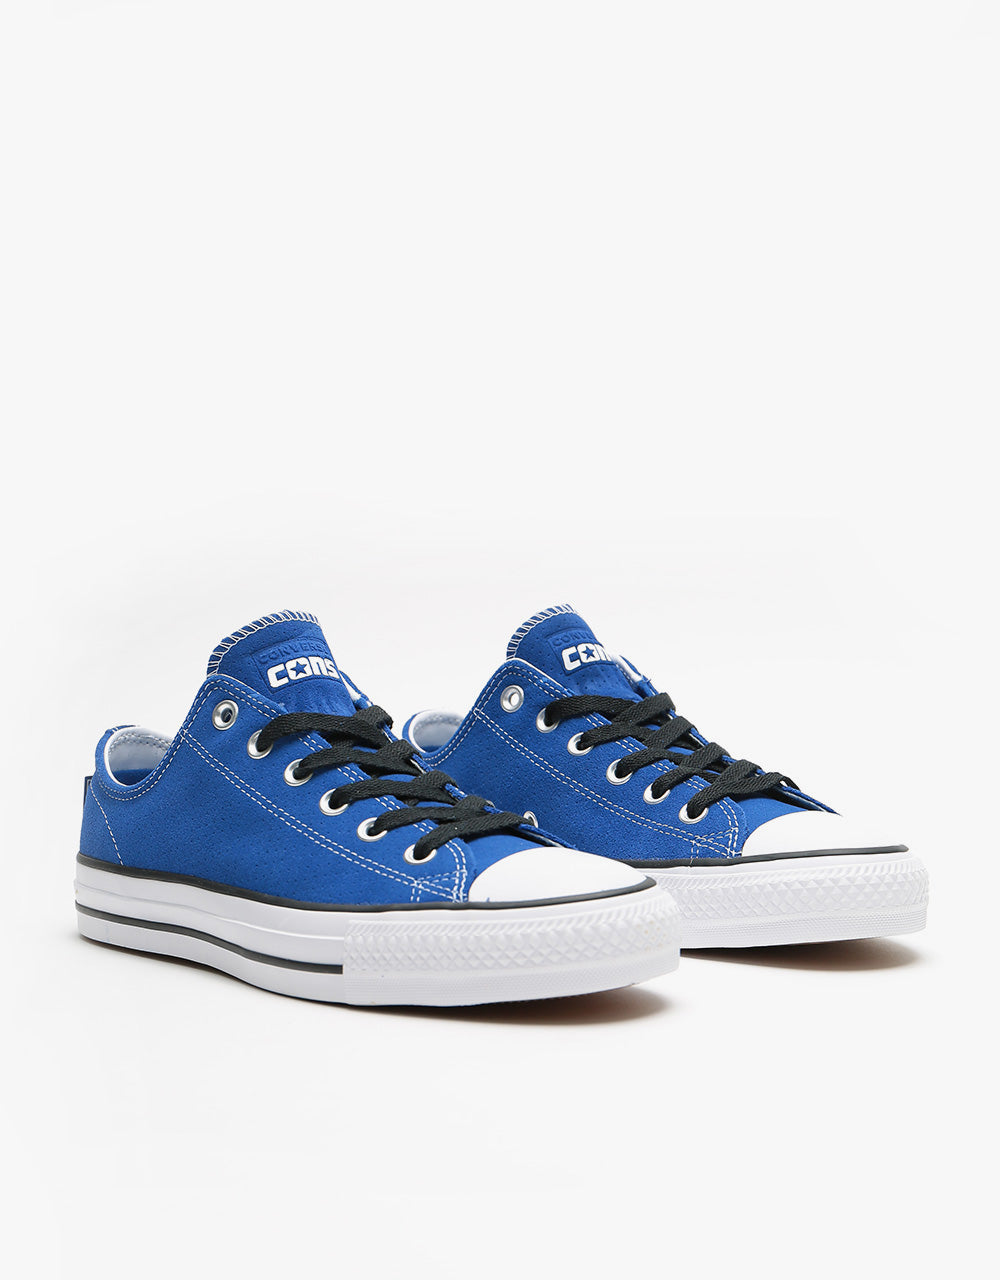 Converse CTAS Pro Ox Skate Shoes - Rush Blue/Black/White